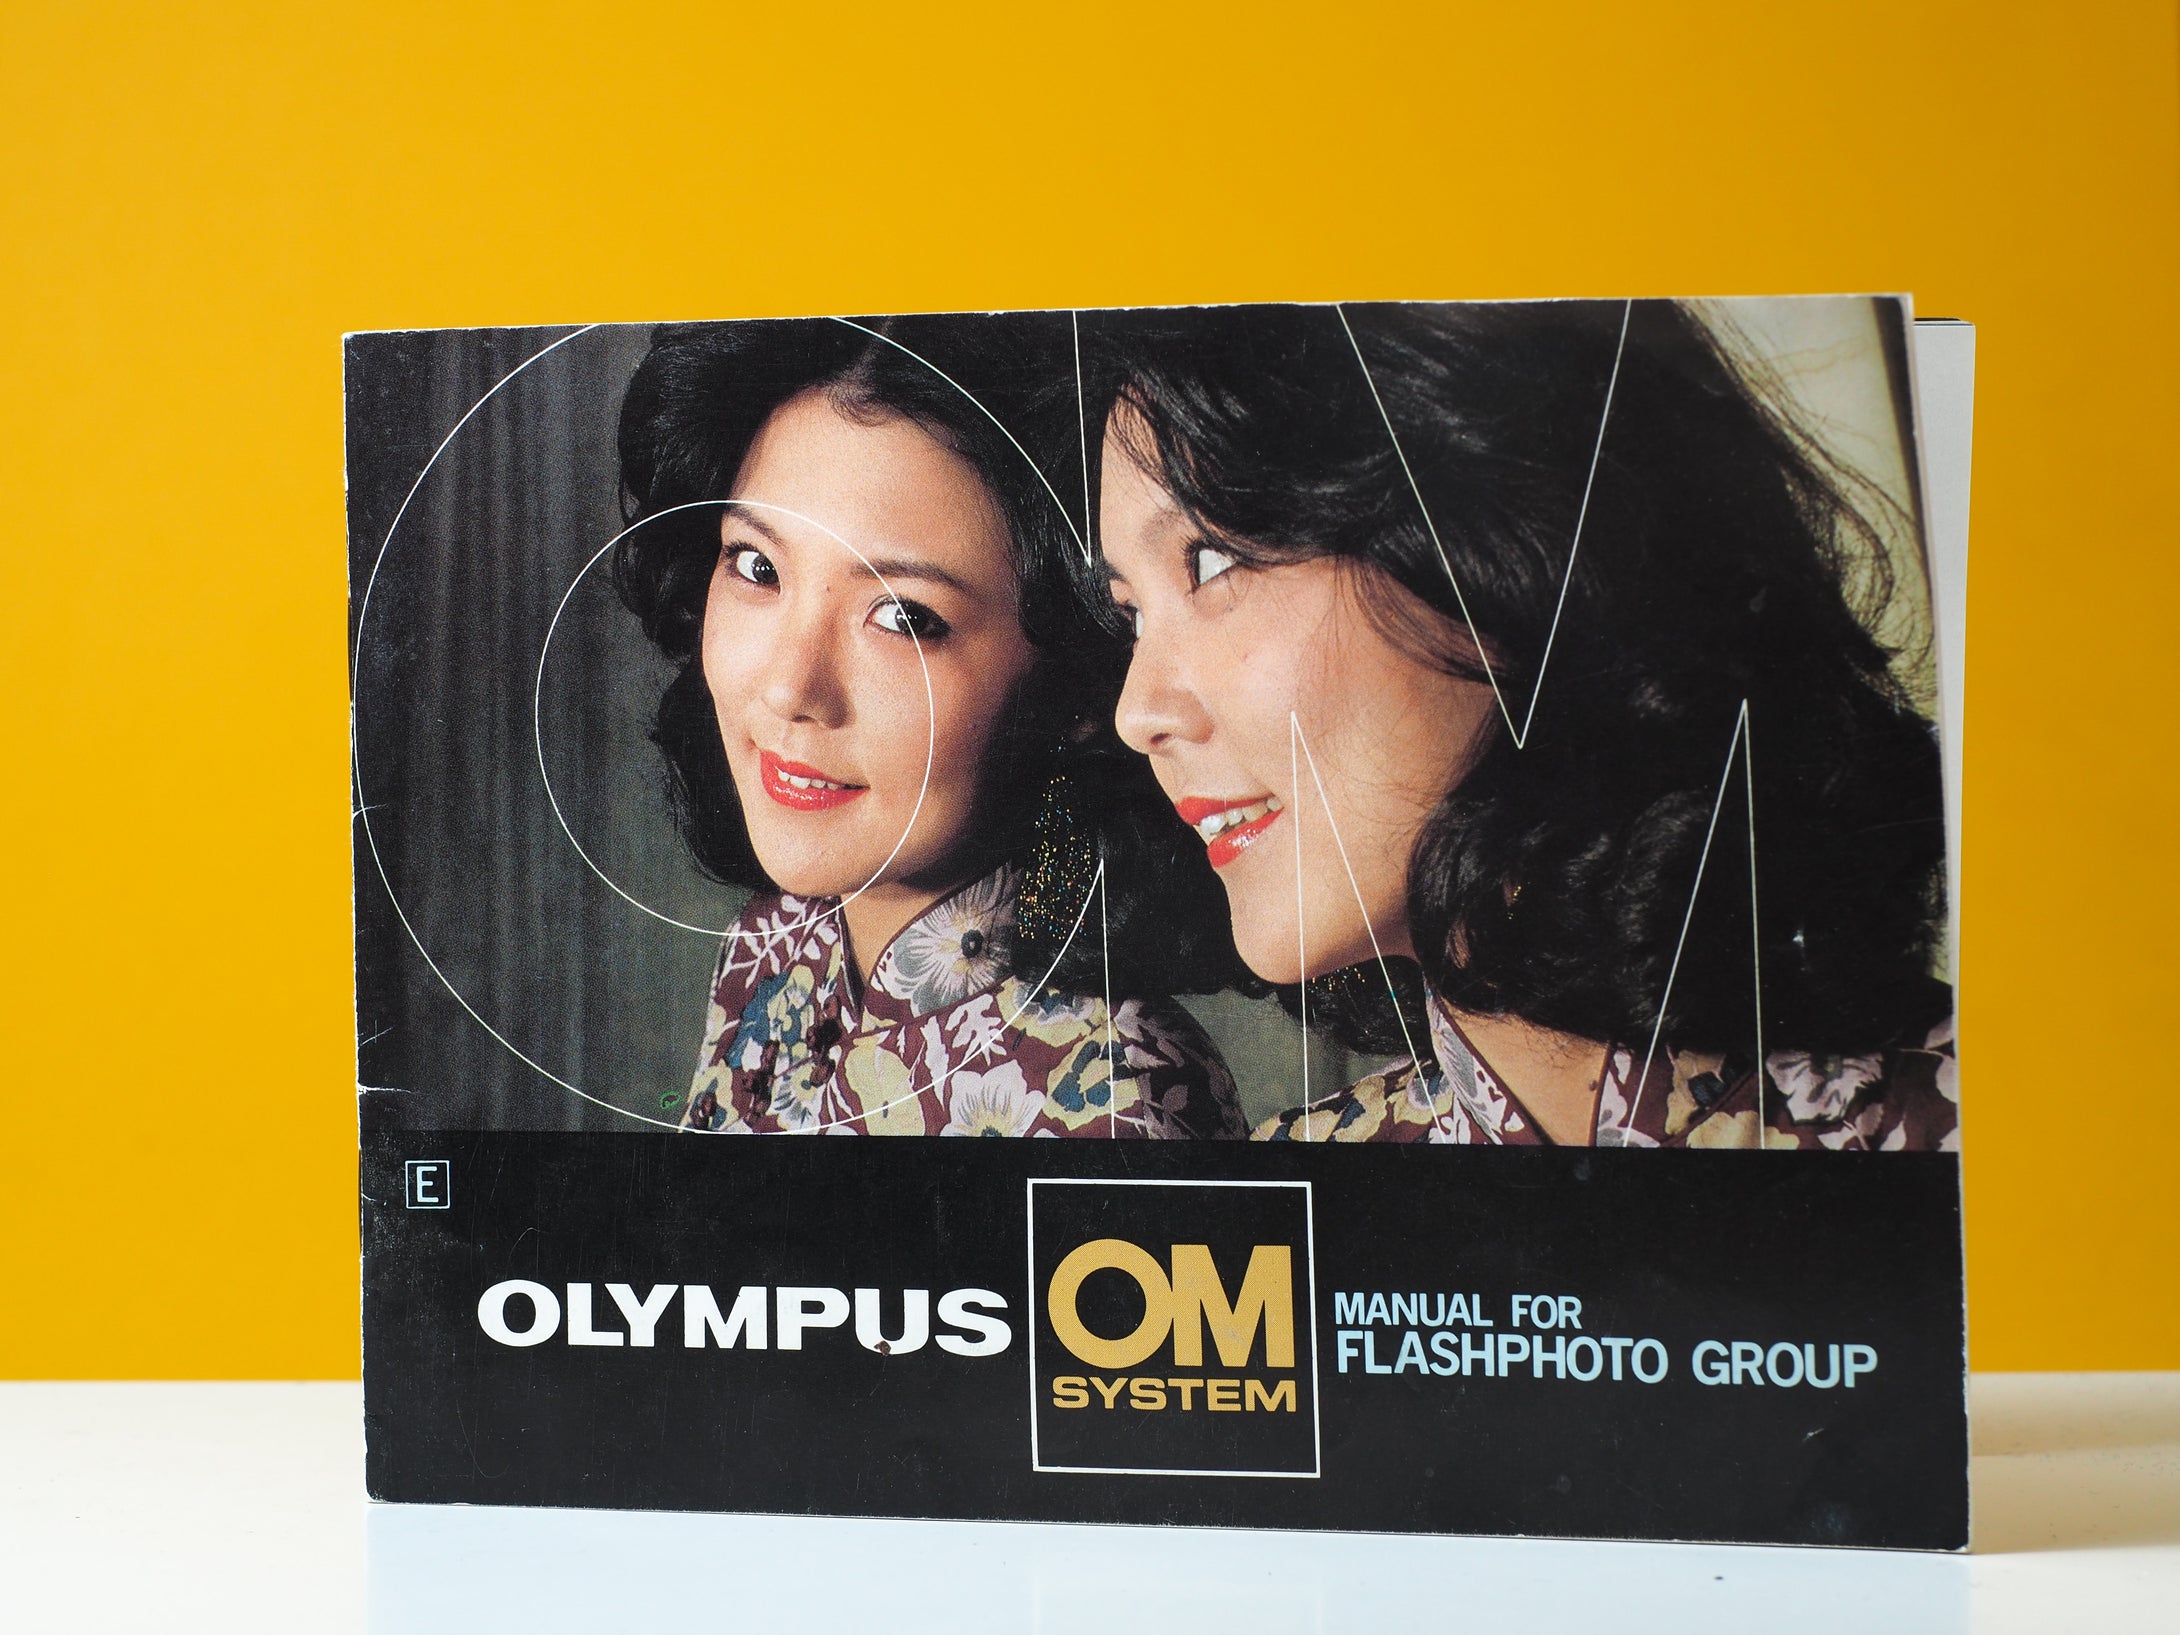 Olympus Flashphoto Group Manual